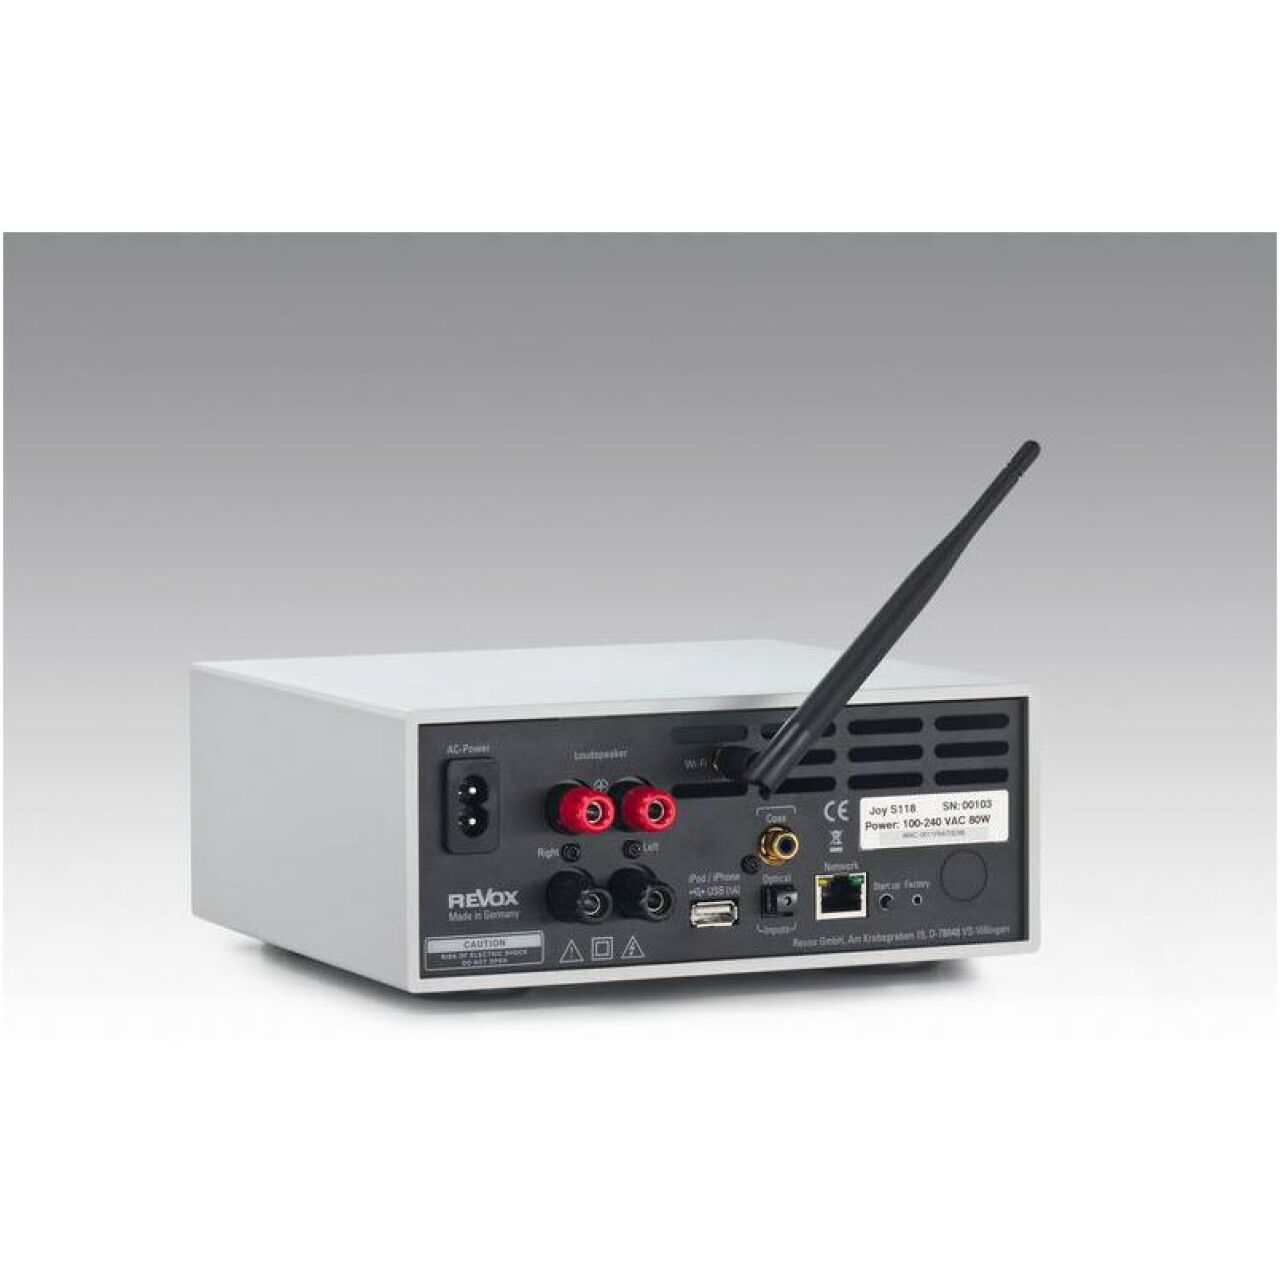 Revox Joy S118 network receiver